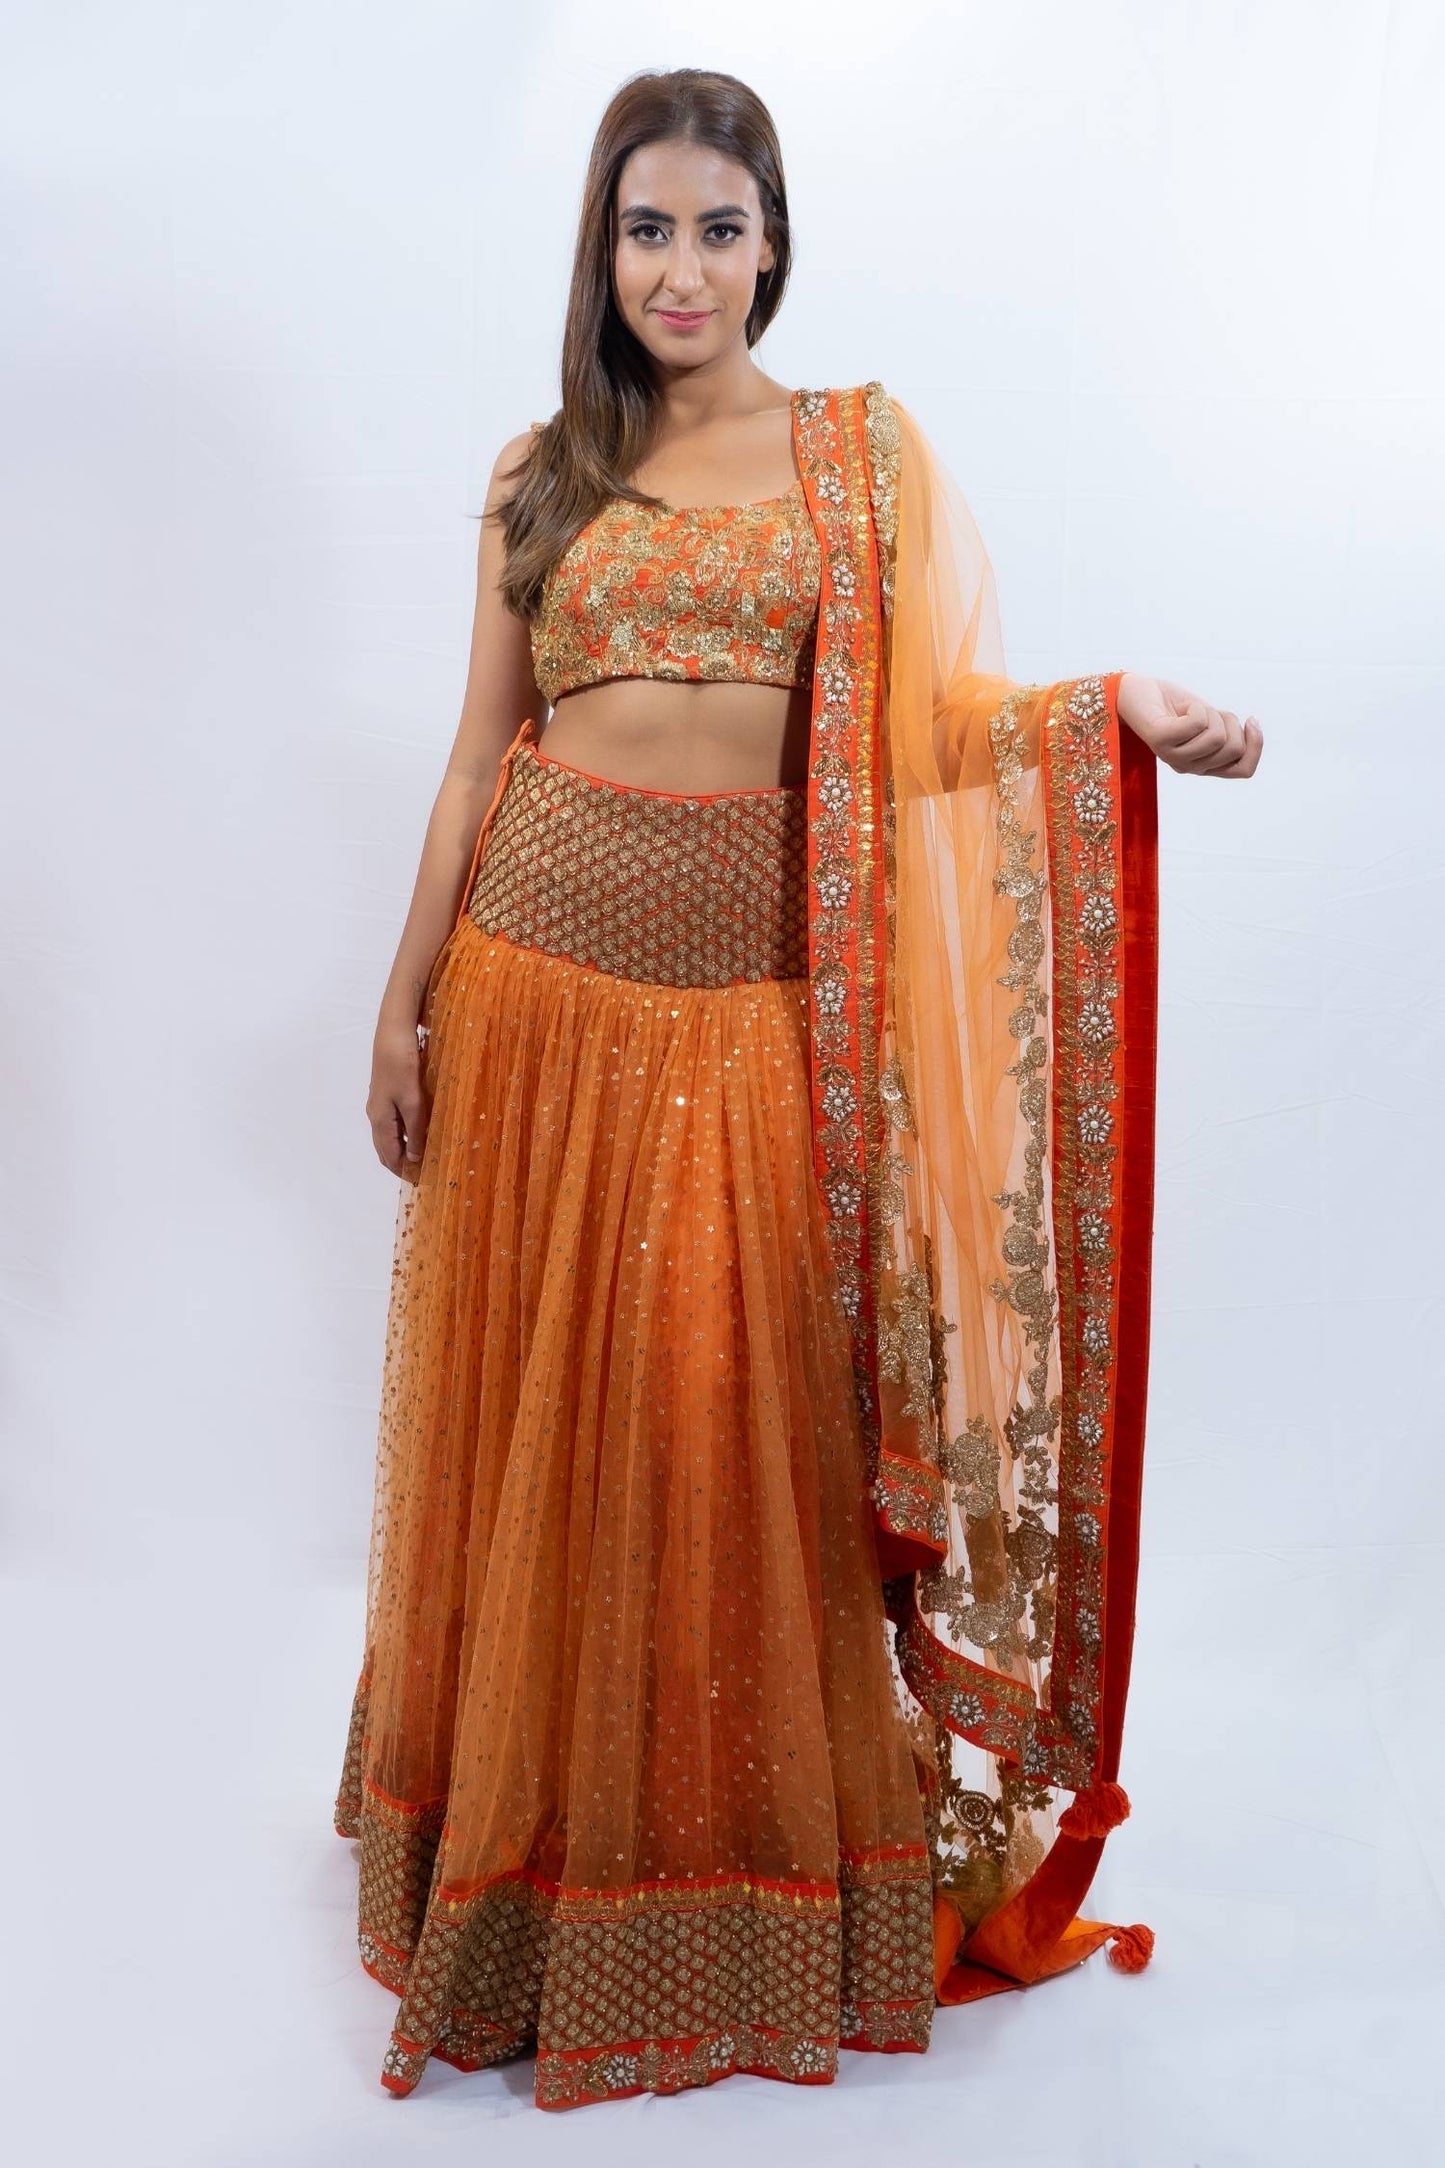 Orange and gold detail lengha Indian outfit rental in Bangkok